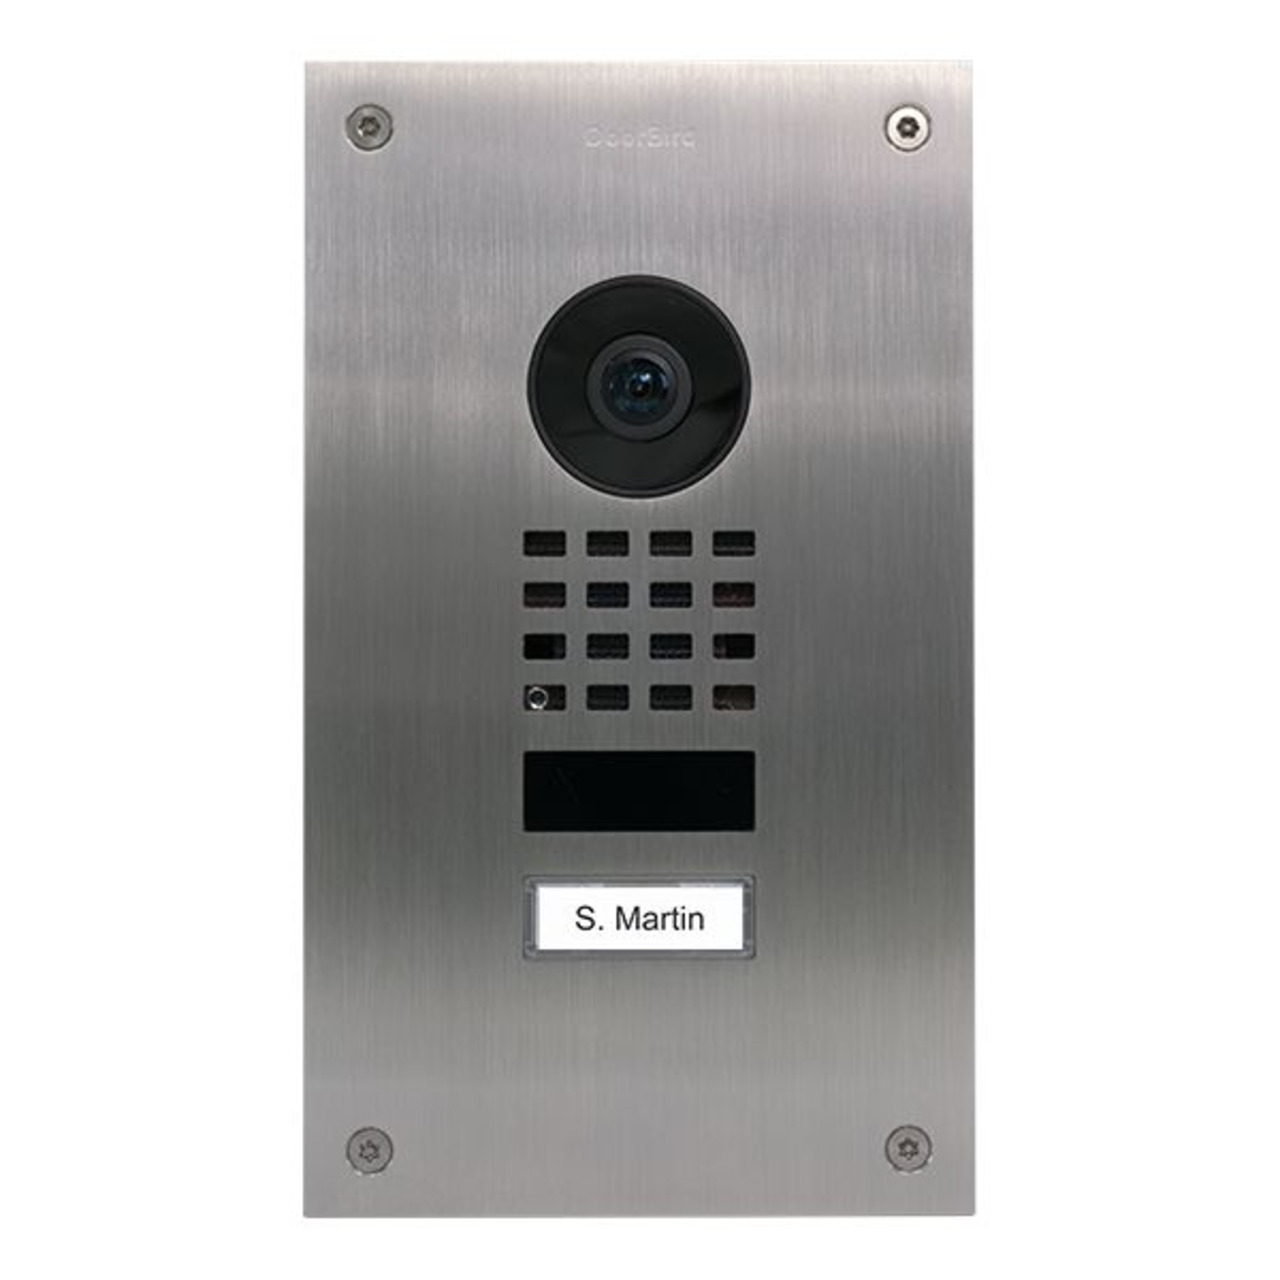 Doorbird LAN-IP-Türsprechanlage D1101UV- Unterputz (Upgrade für vorhandene D201 - D202) unter Haustechnik